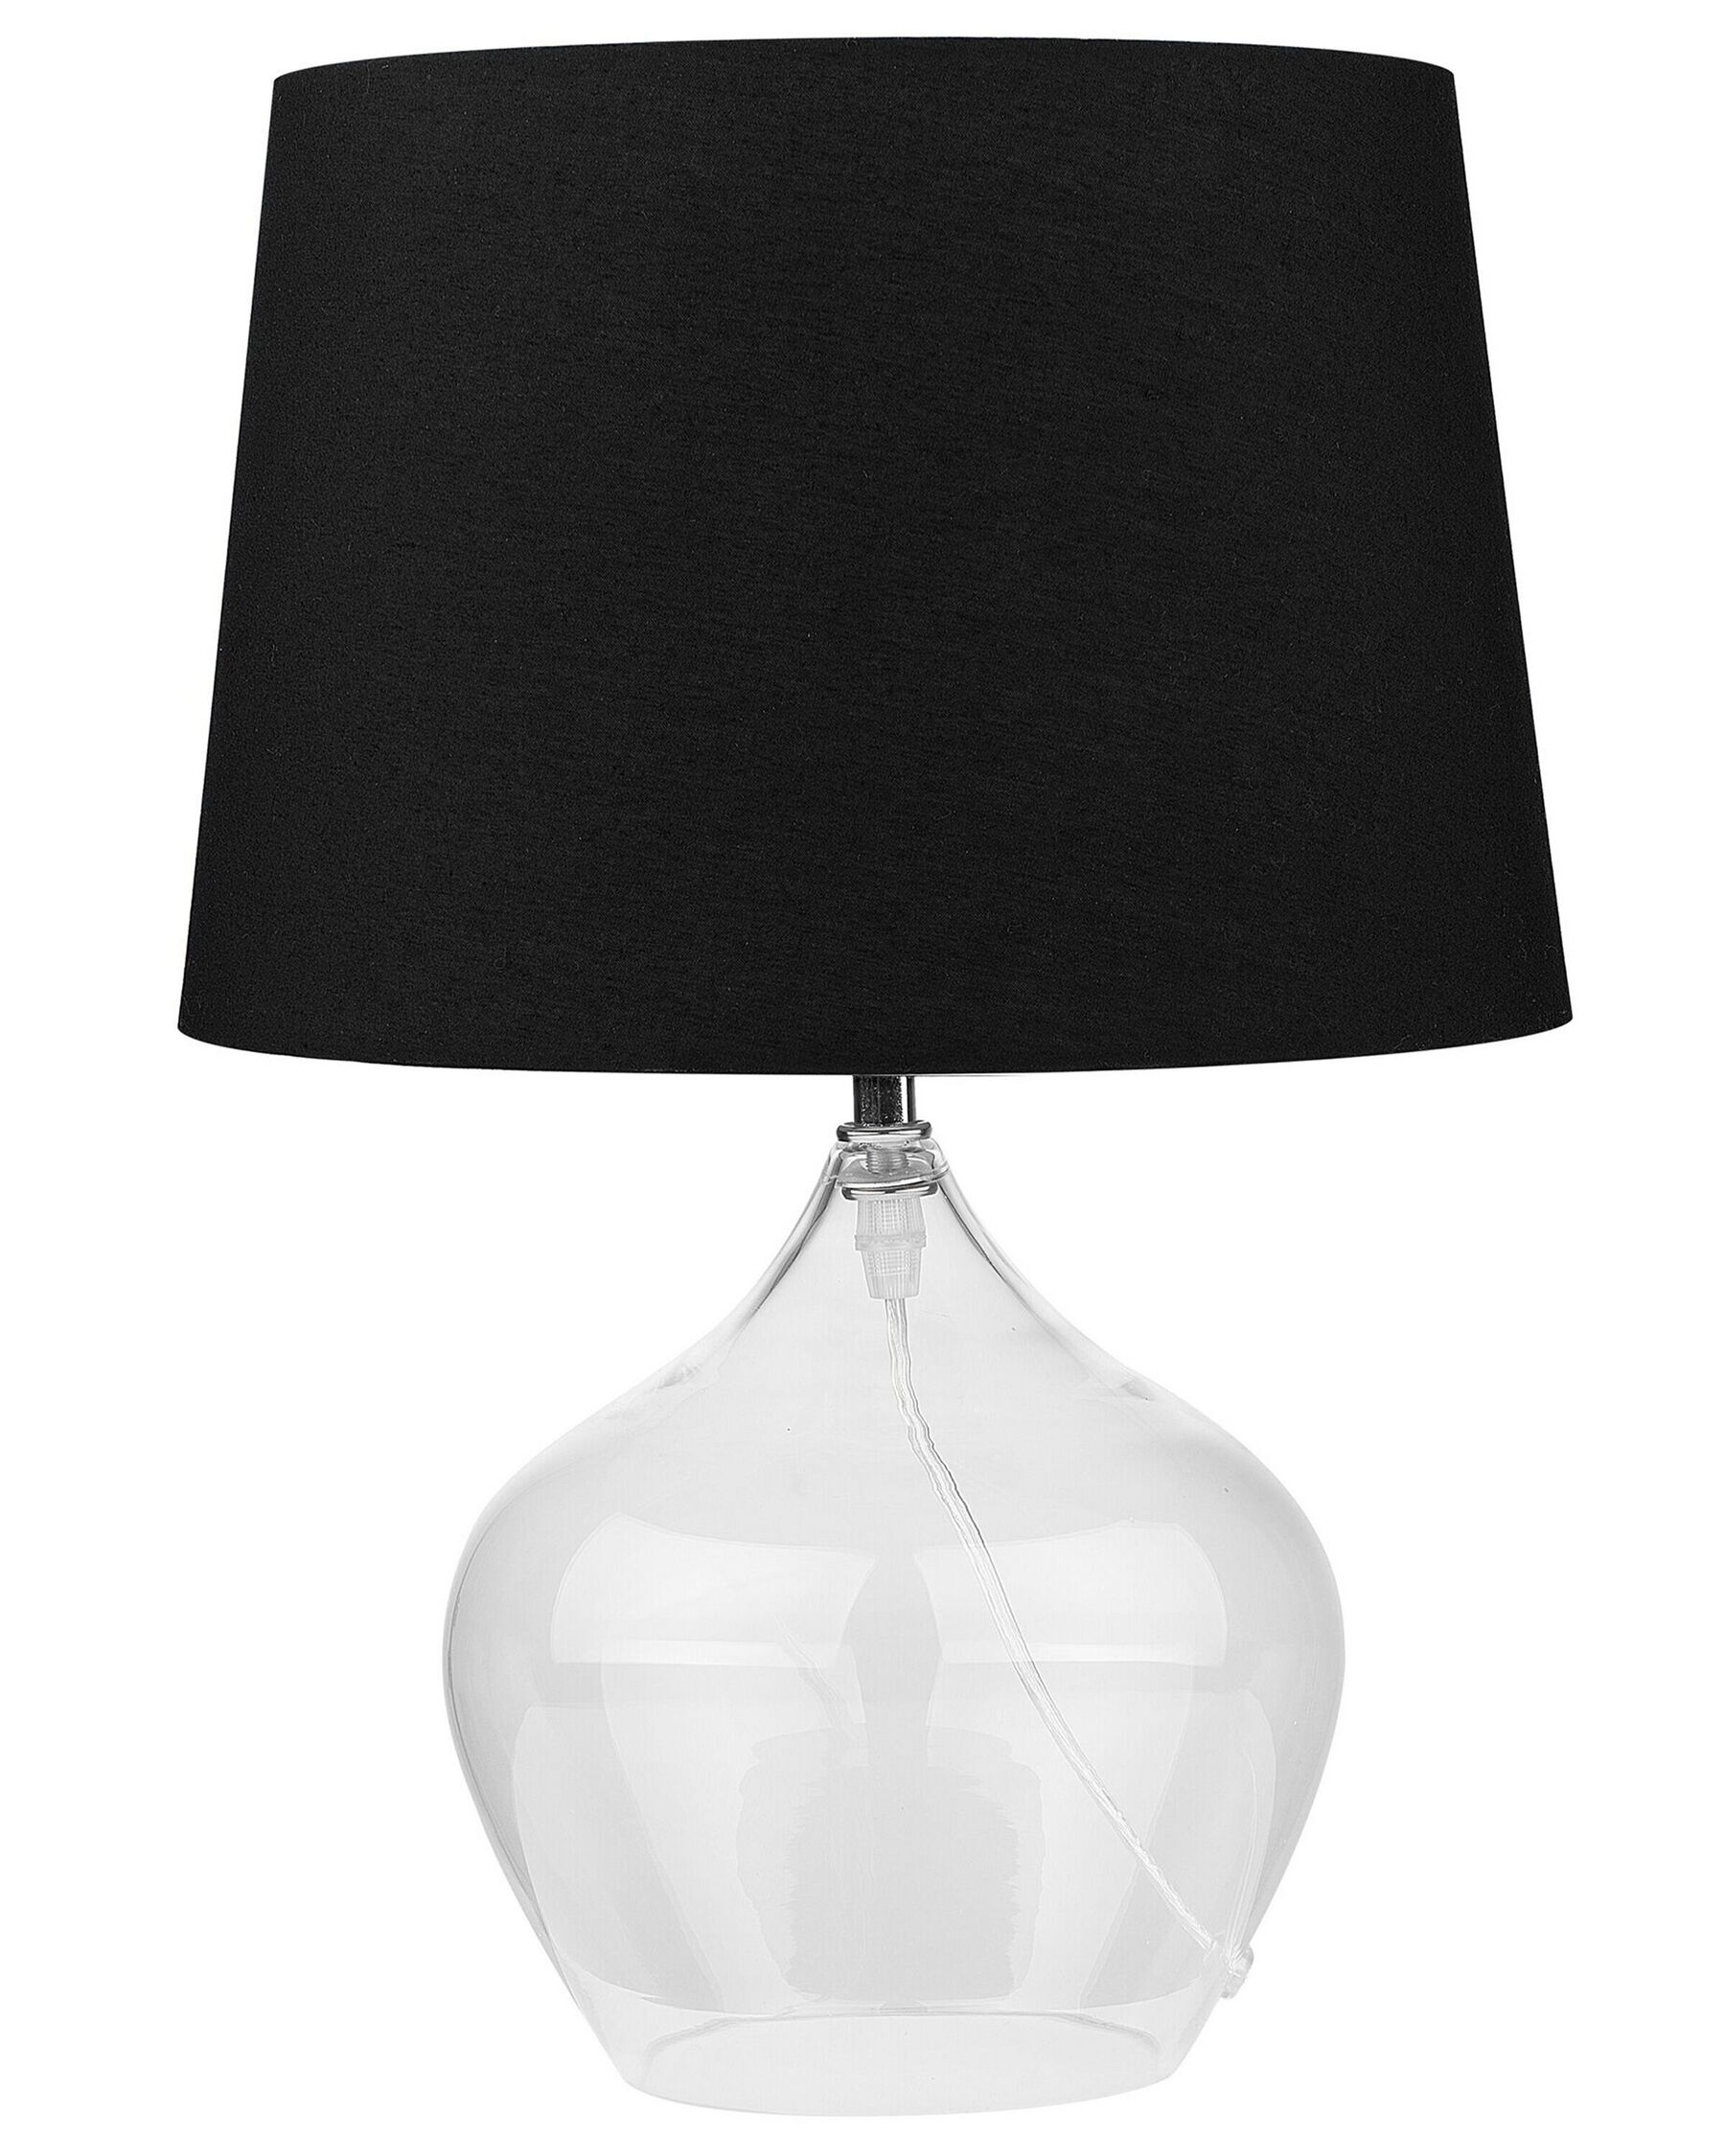 Lampada da tavolo nera e trasparente OSUM_726604